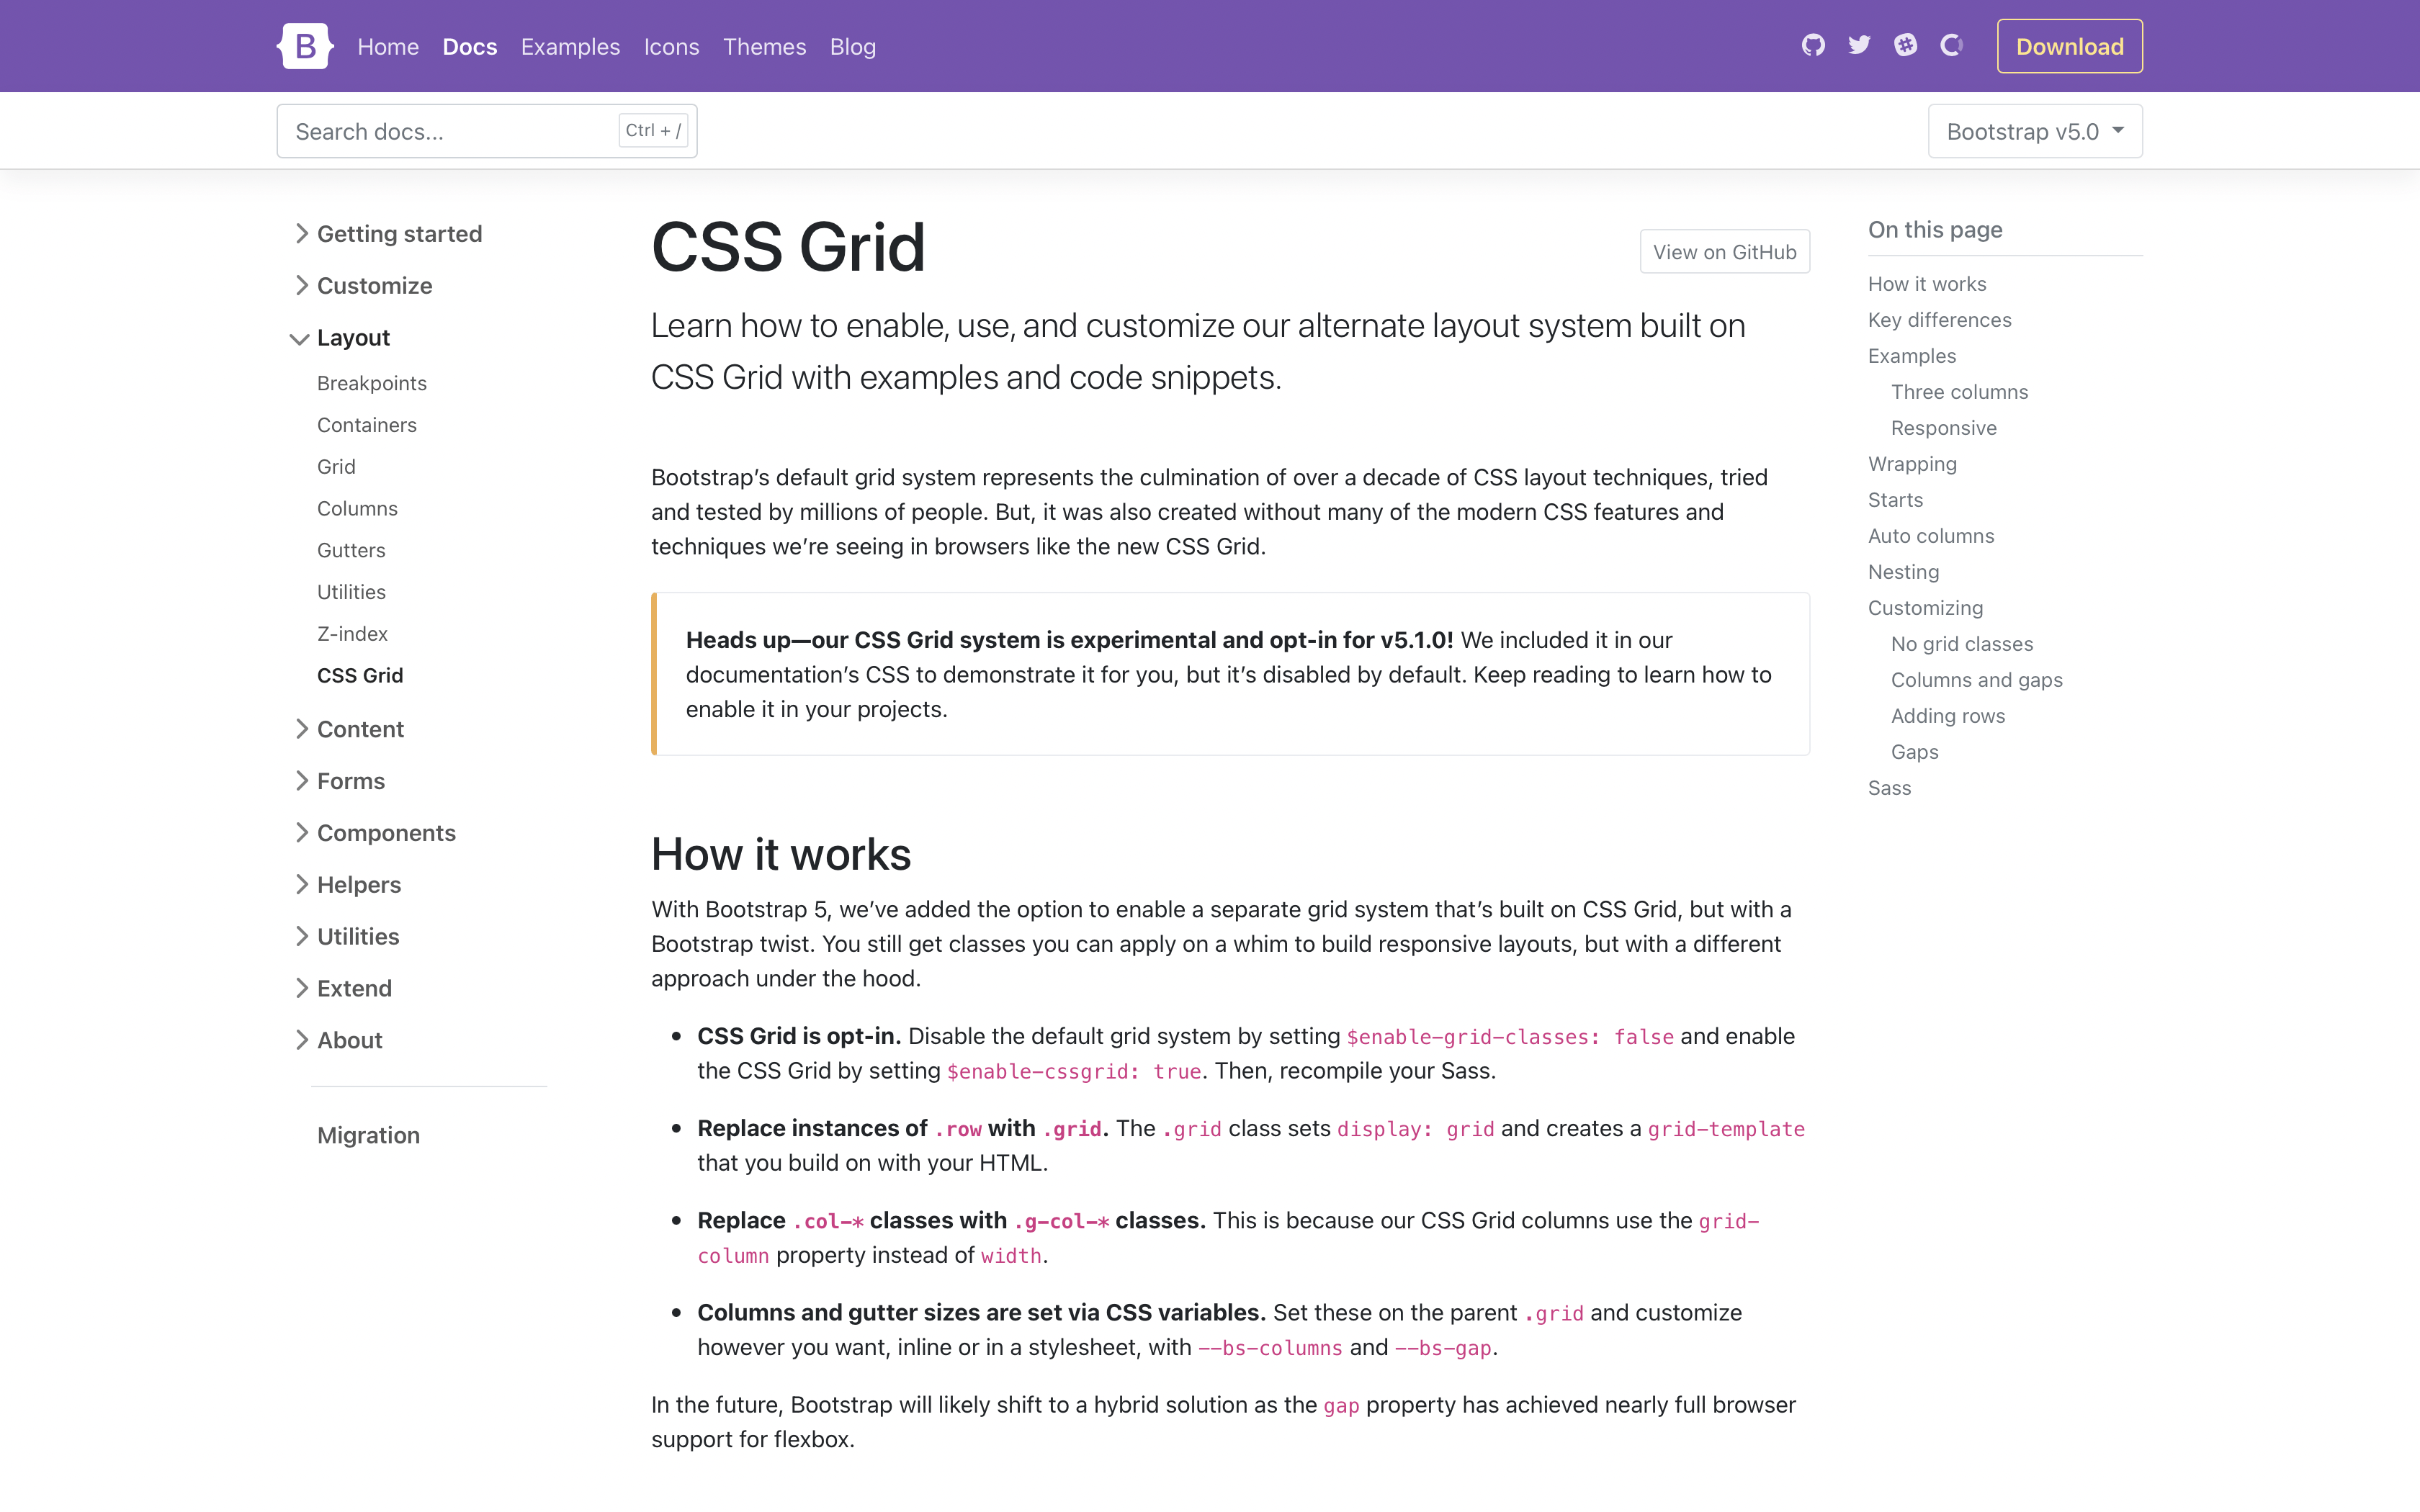 CSS Grid docs